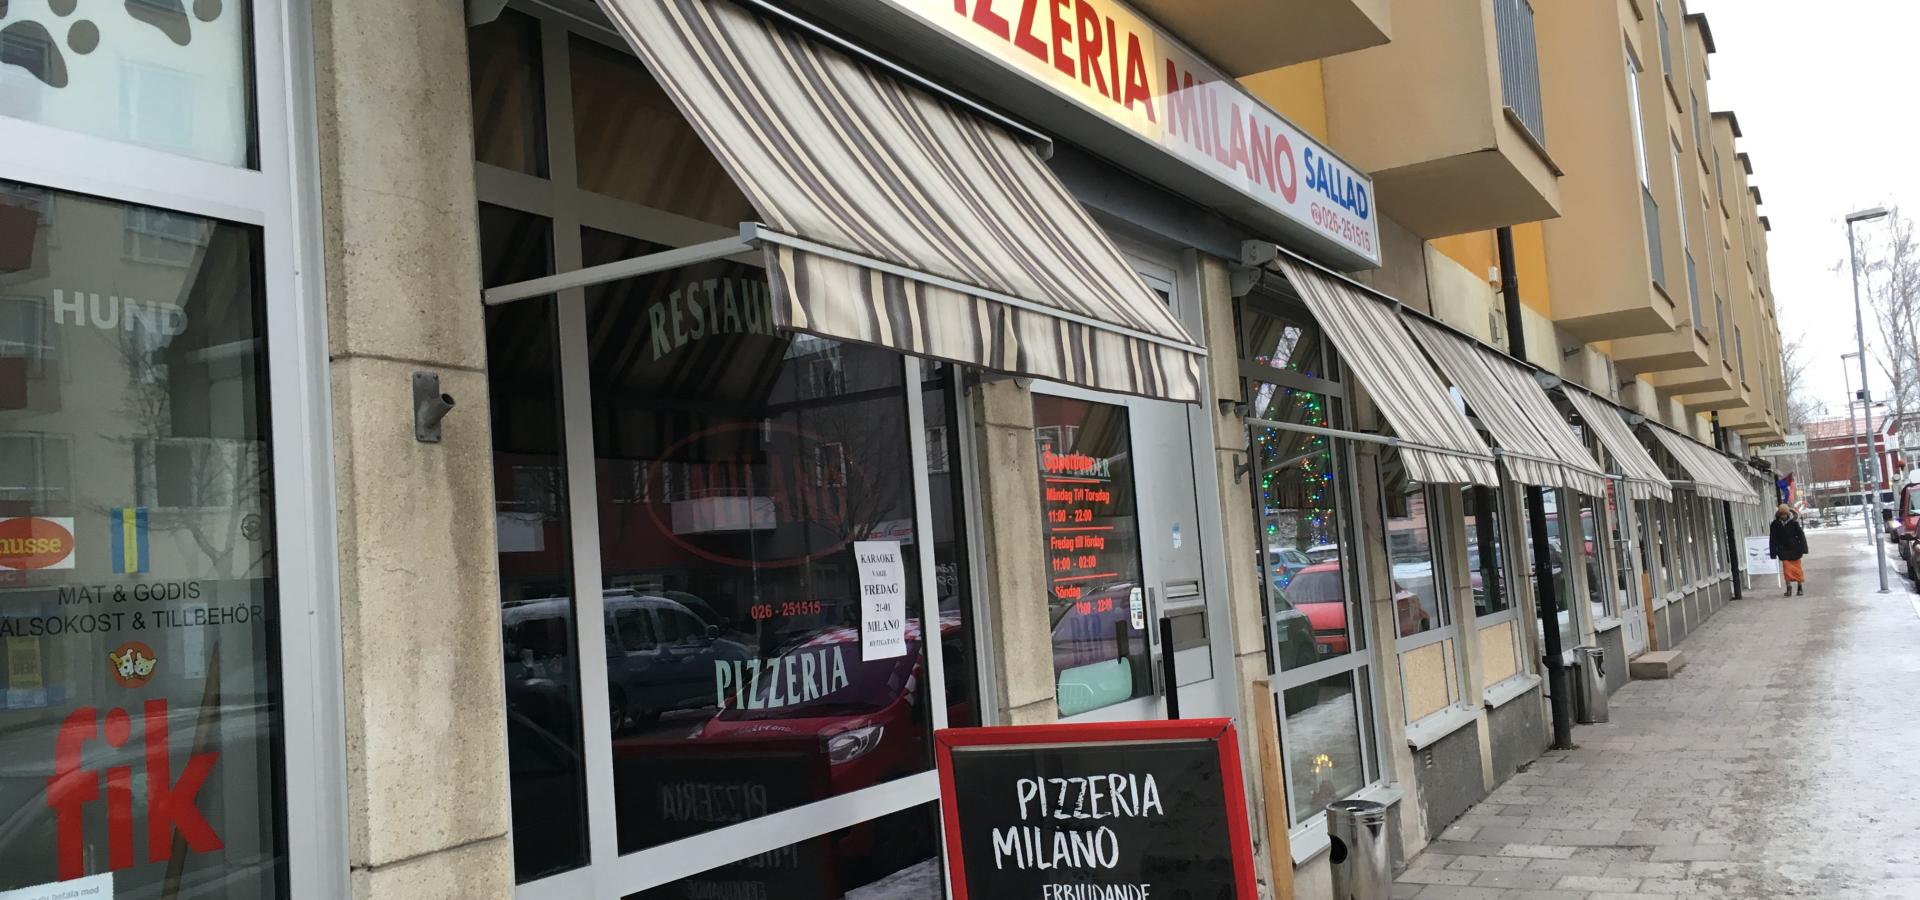 Restaurang & Pizzeria Milano